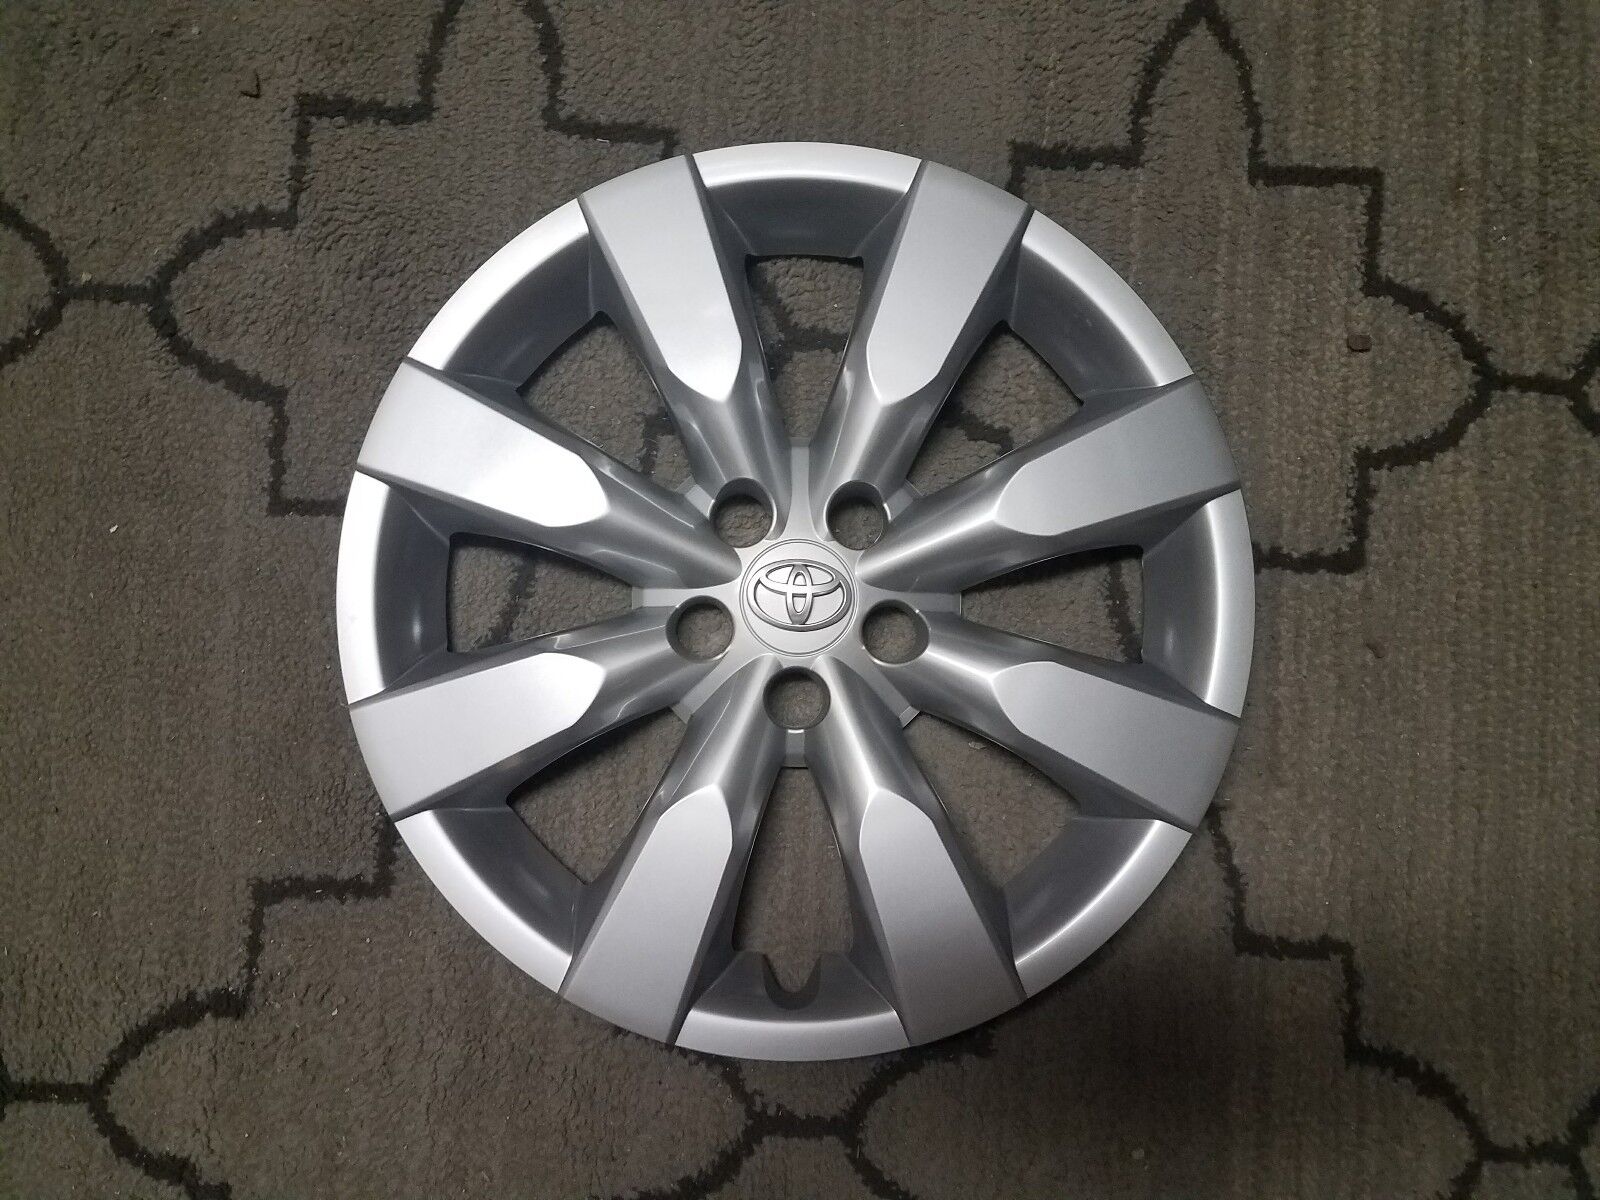 1 Brand New 2014 14 2015 15 2016 16 Corolla 16” Hubcap Wheel Cover 61172